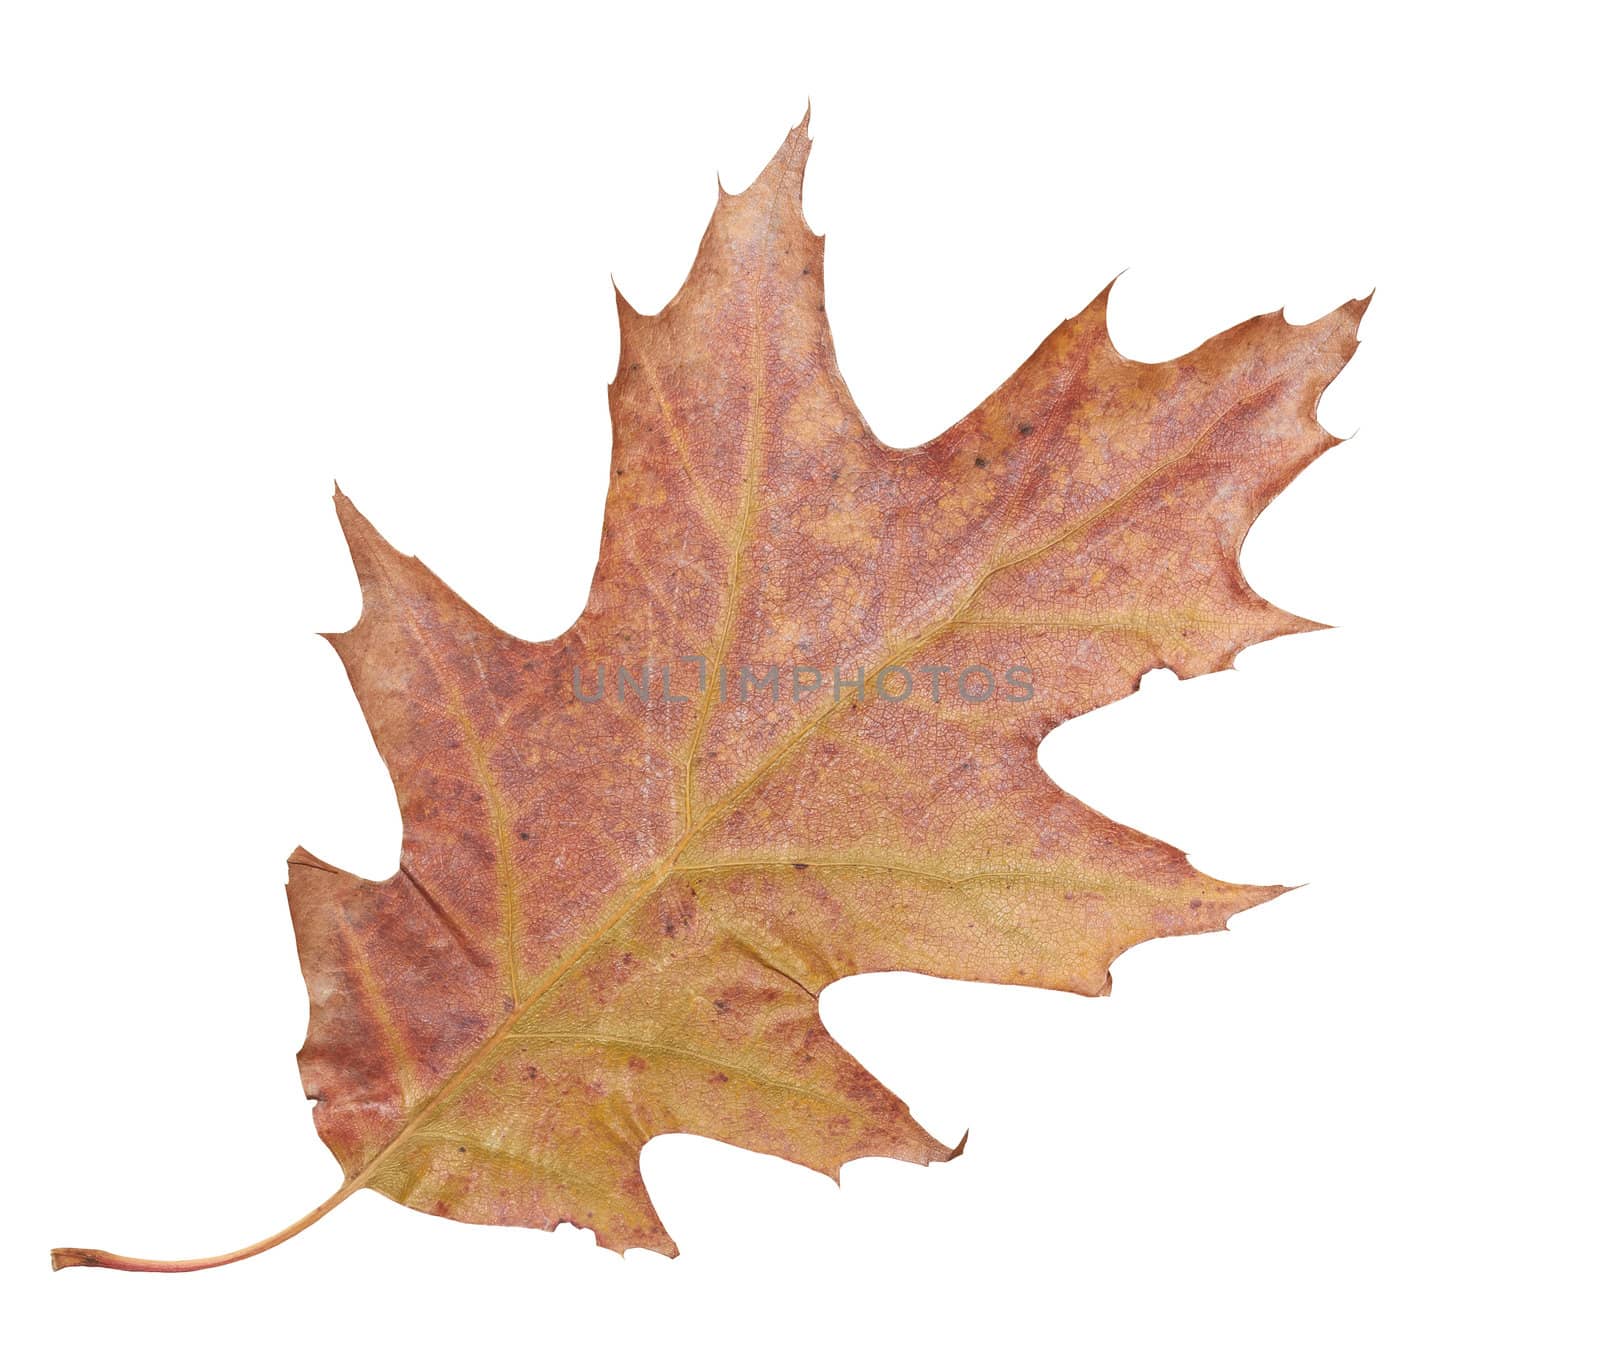 Dry maple leaf close-up isolated on white background